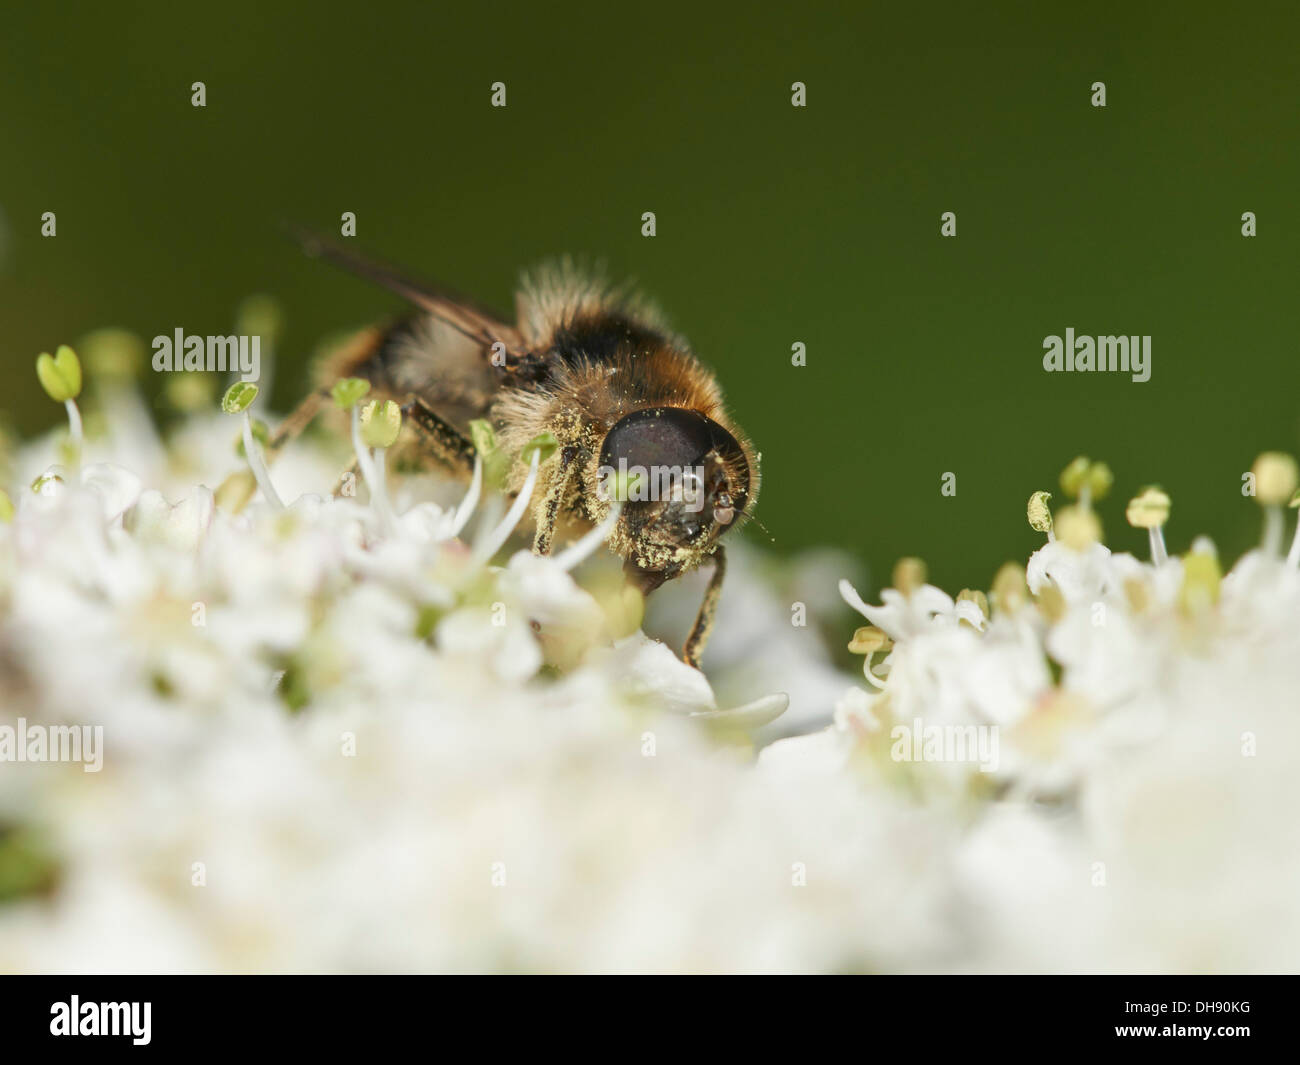 Hoverfly Cheilosia illustrata feeding on nectar from flowering plant. Stock Photo